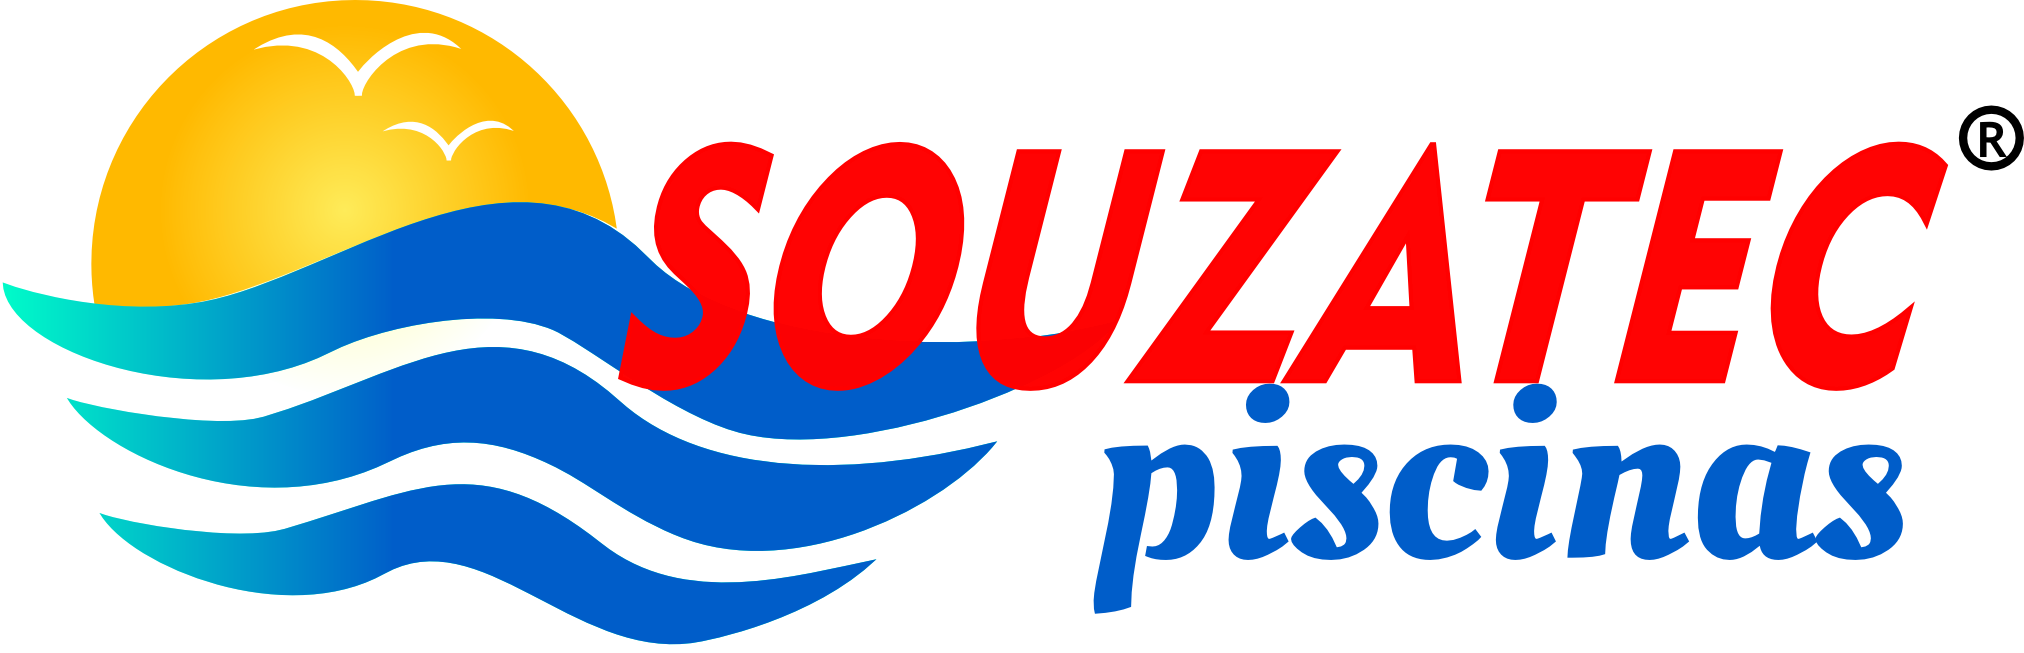 SouzaTec Piscinas